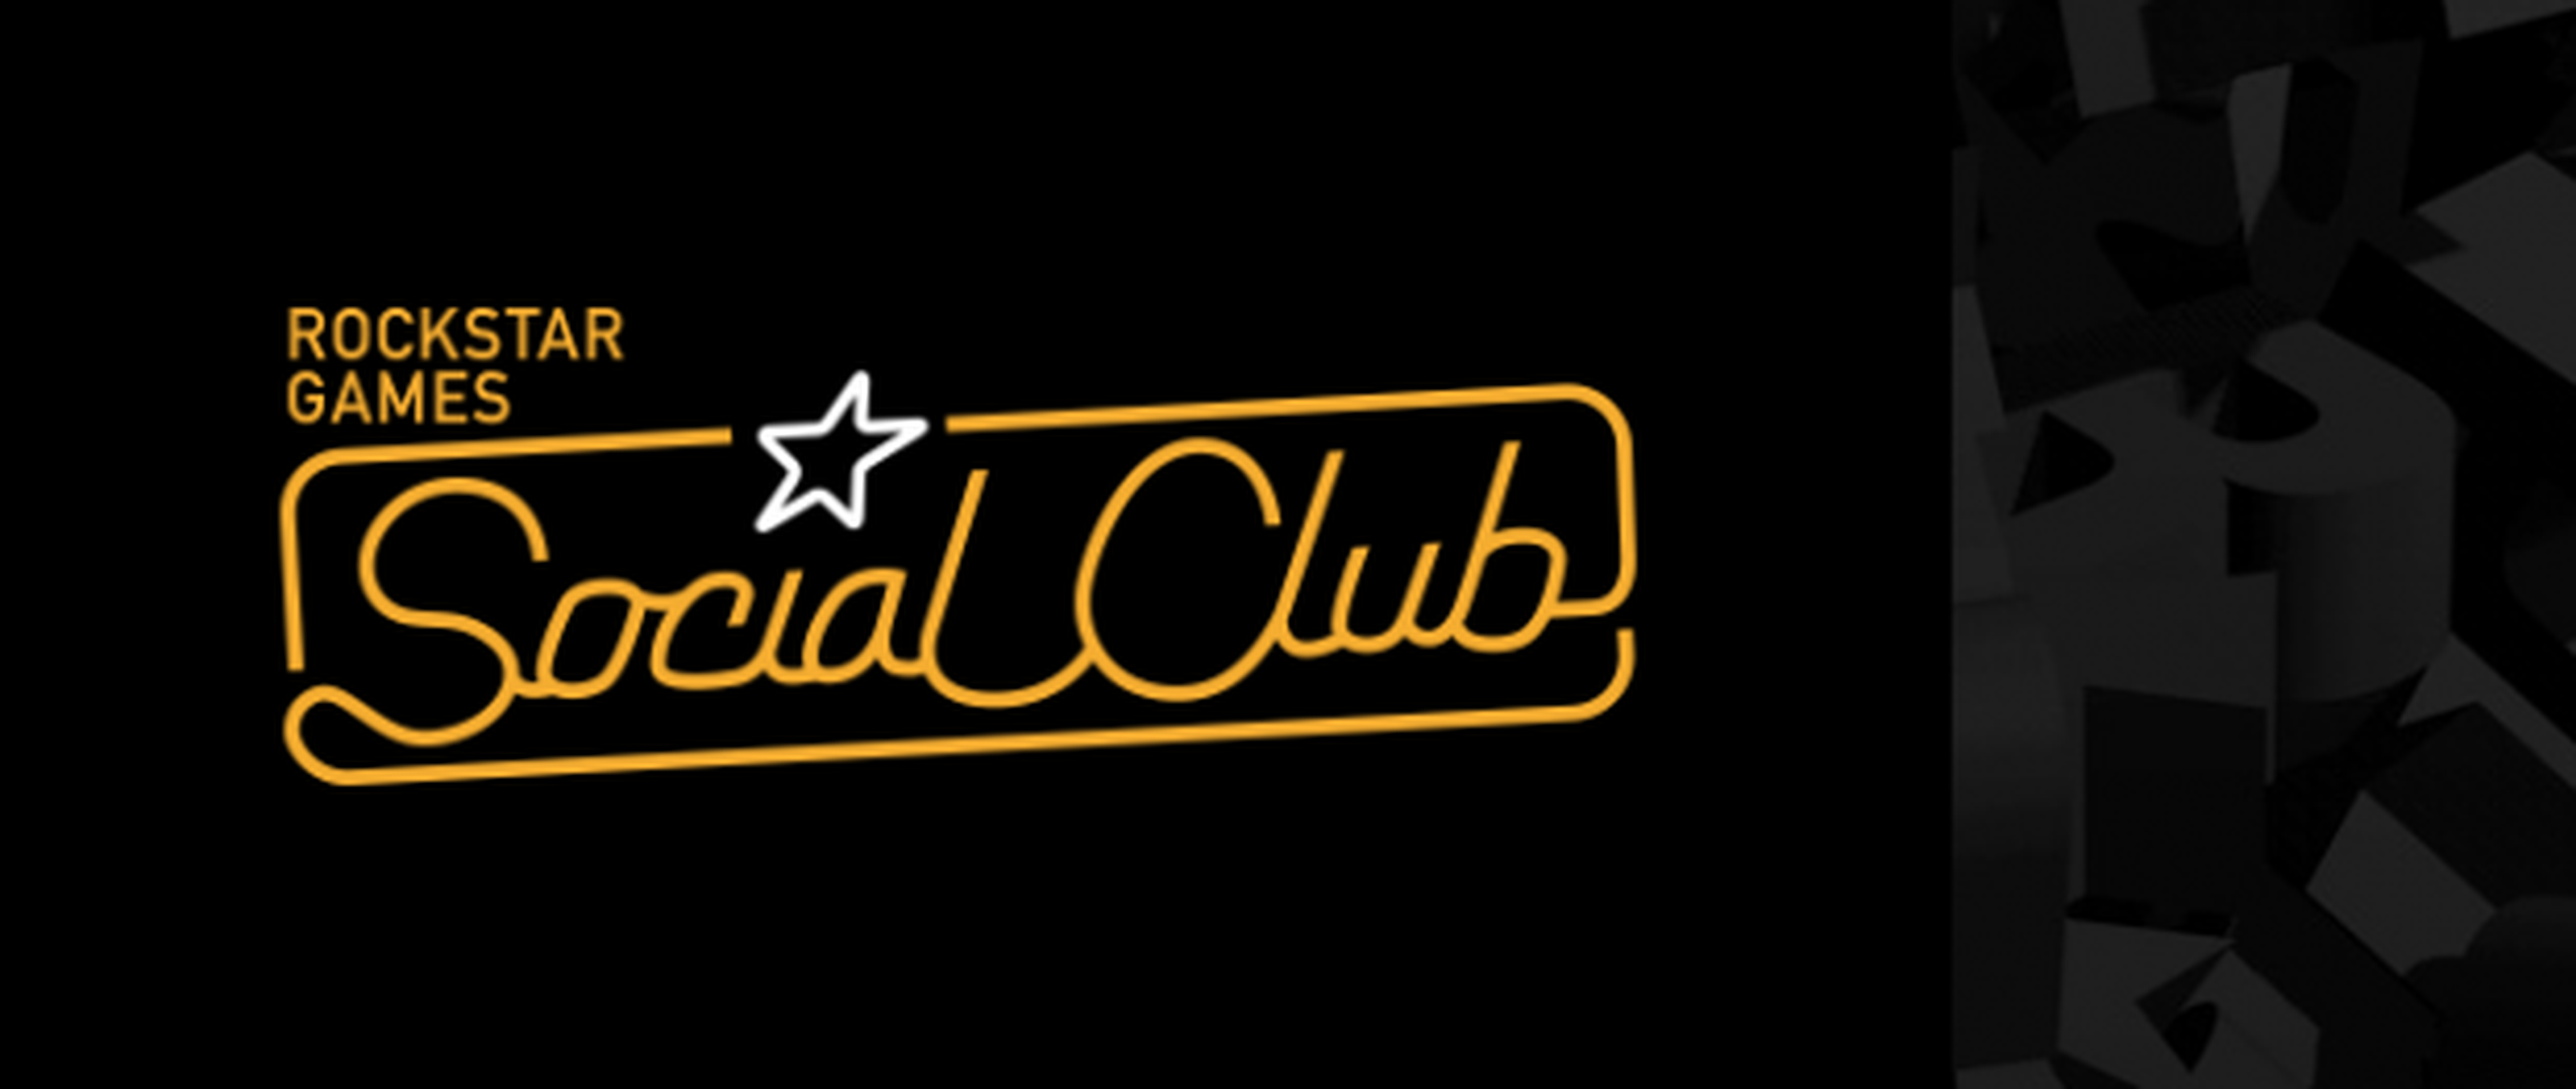 social club rockstar gta 5